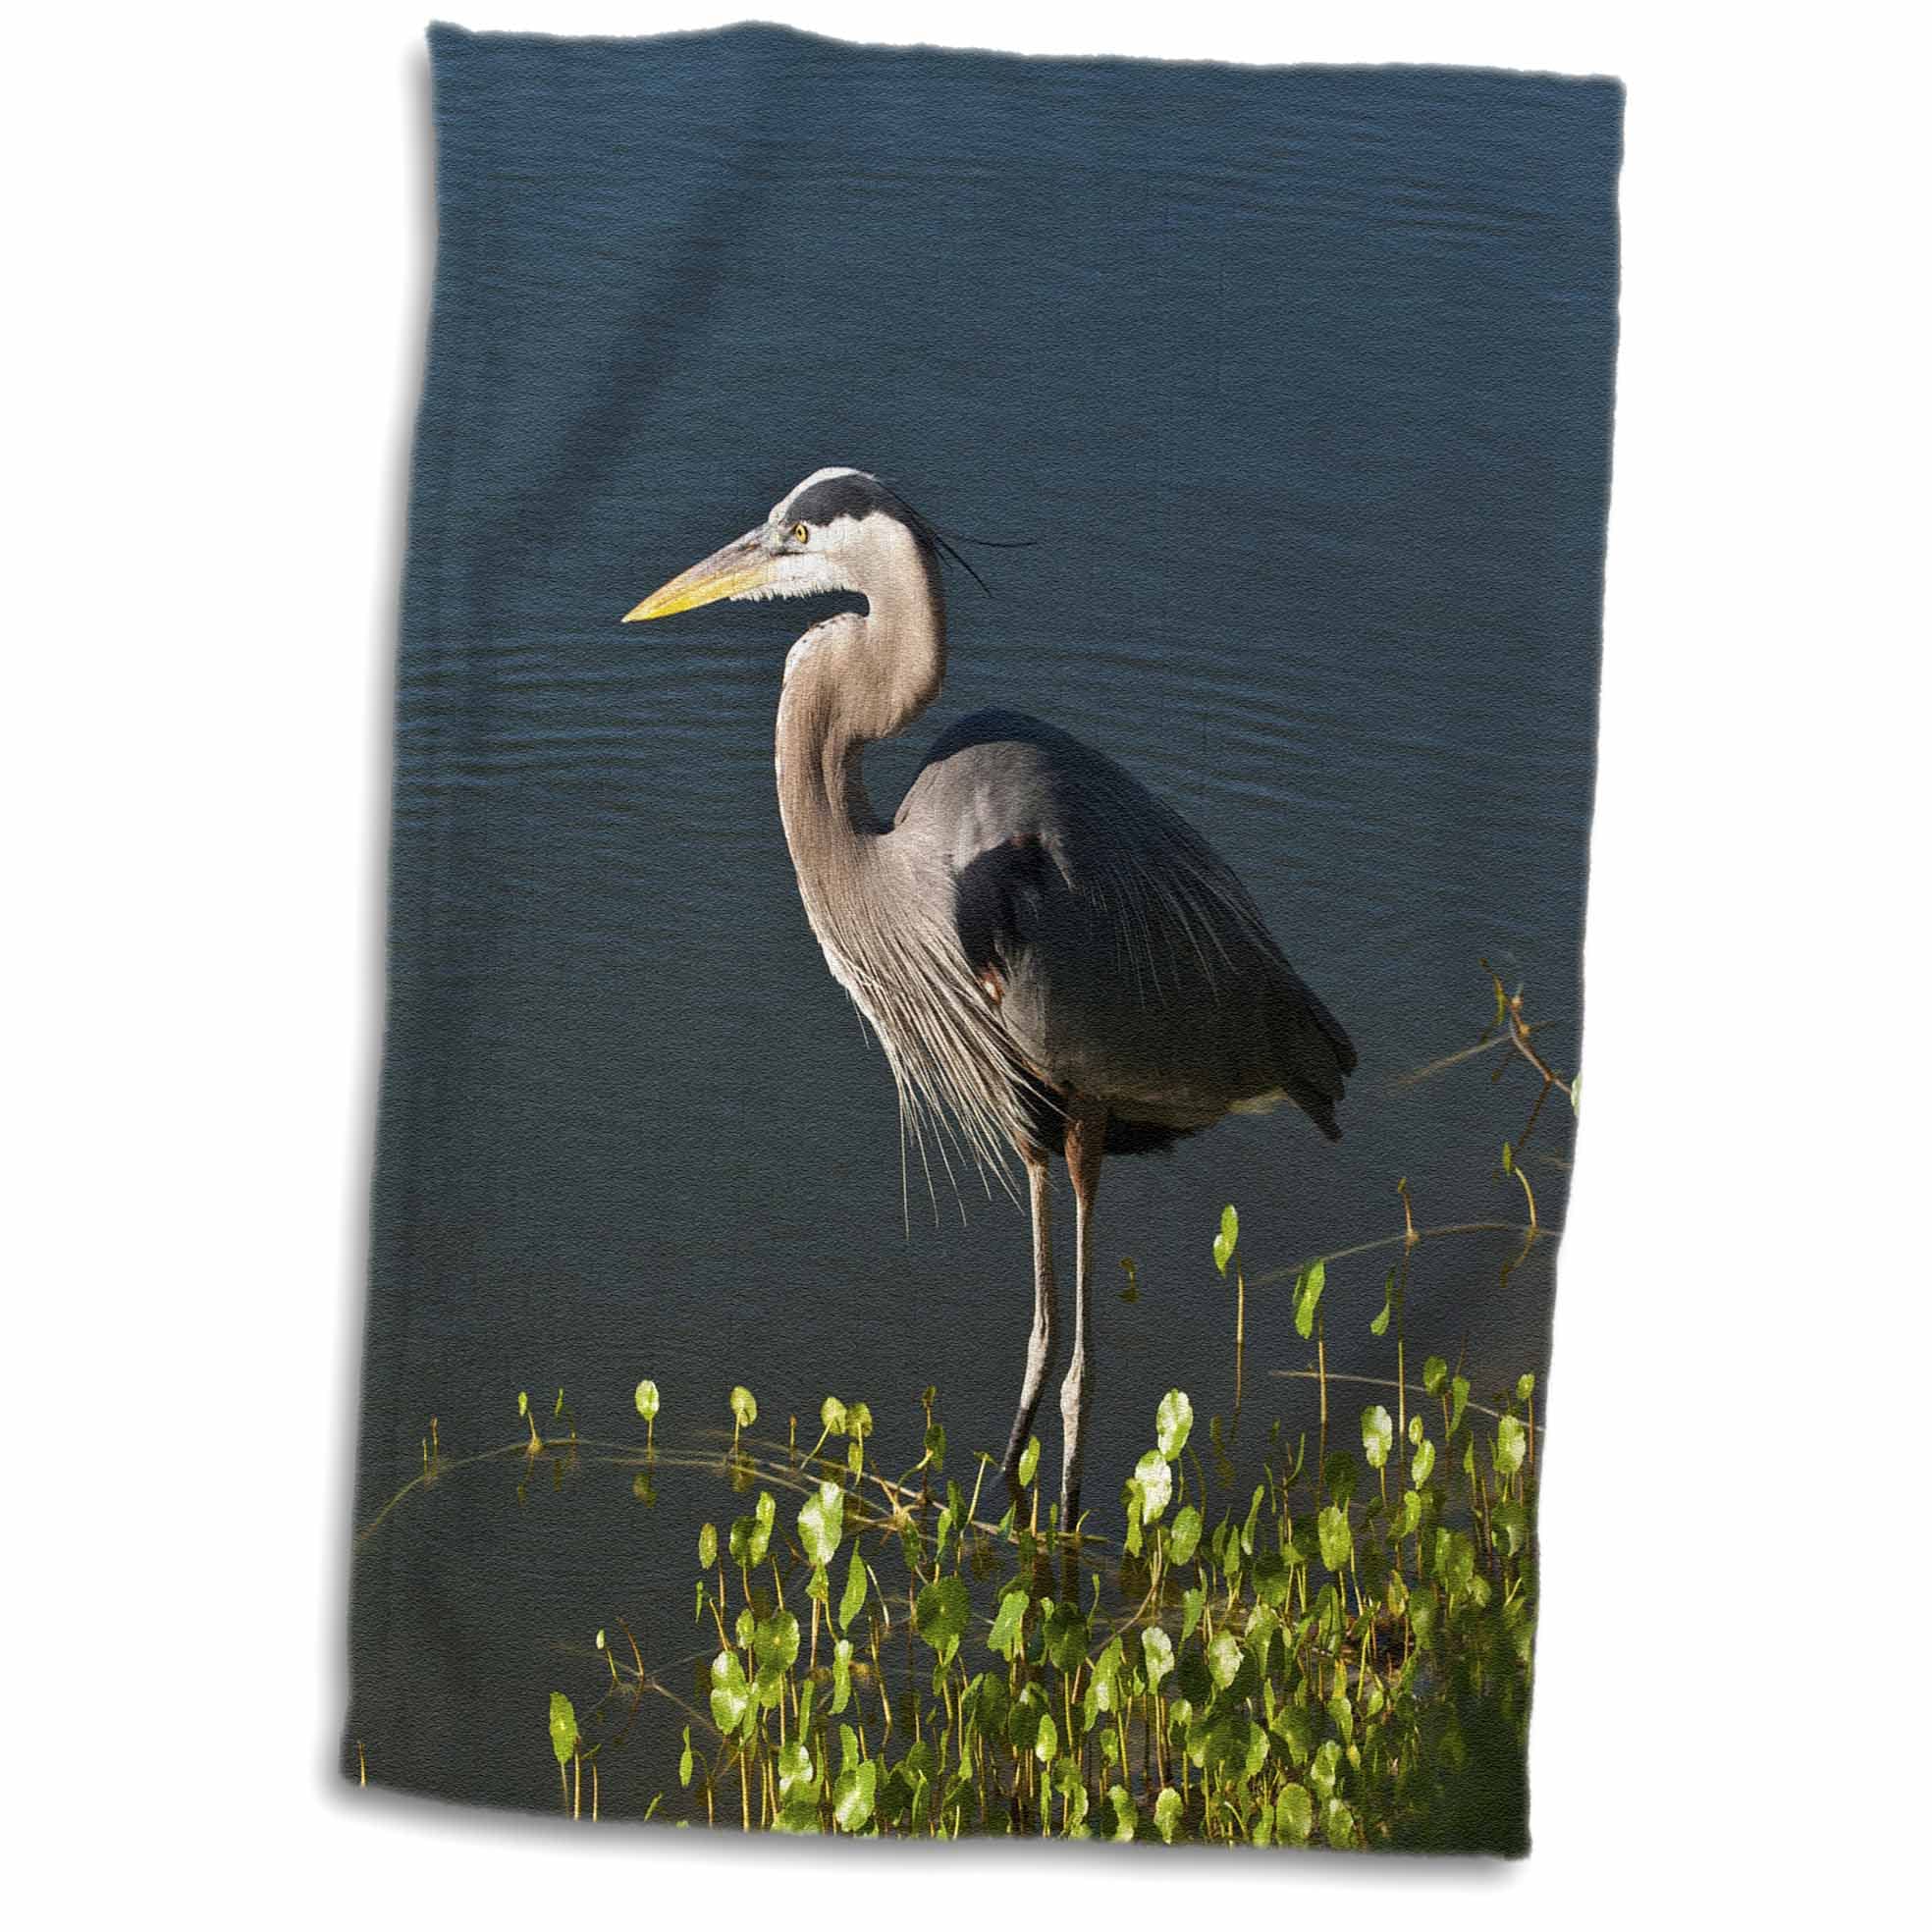 3D Rose Florida-Blue Heron Hunting at Shoreline Hand Towel, 15" x 22"